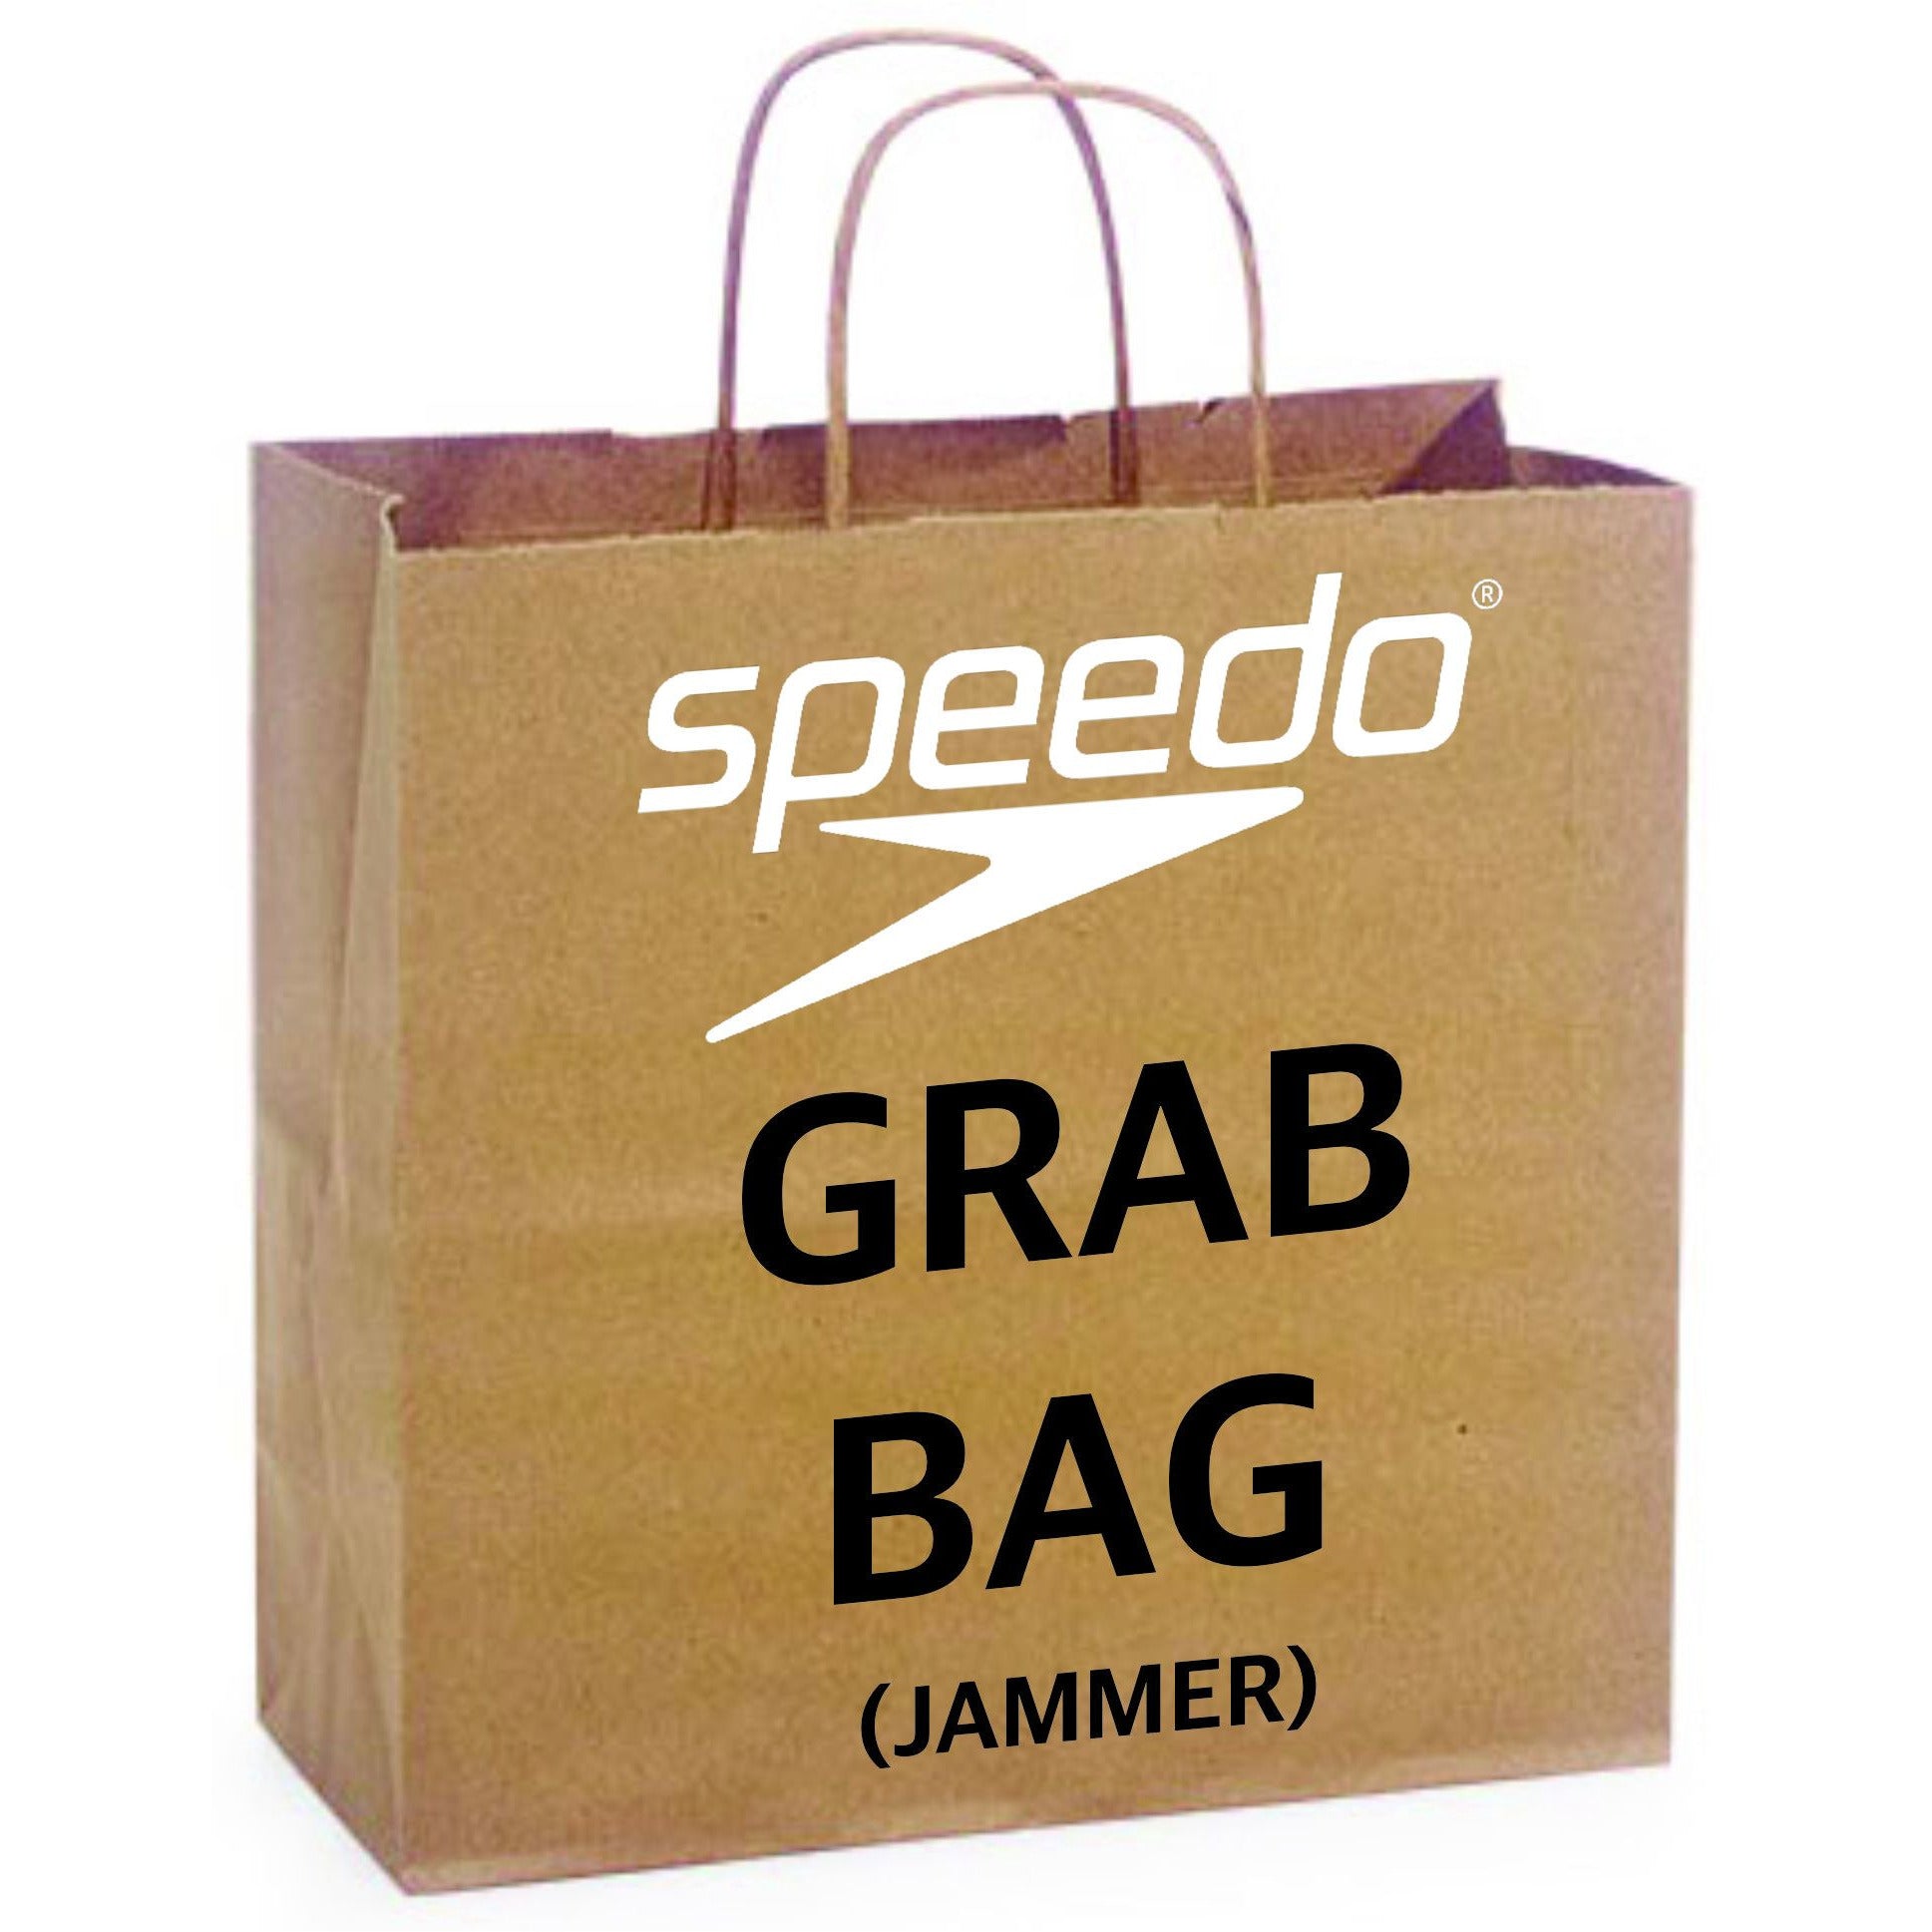 Speedo Grab Bag Male Jammer